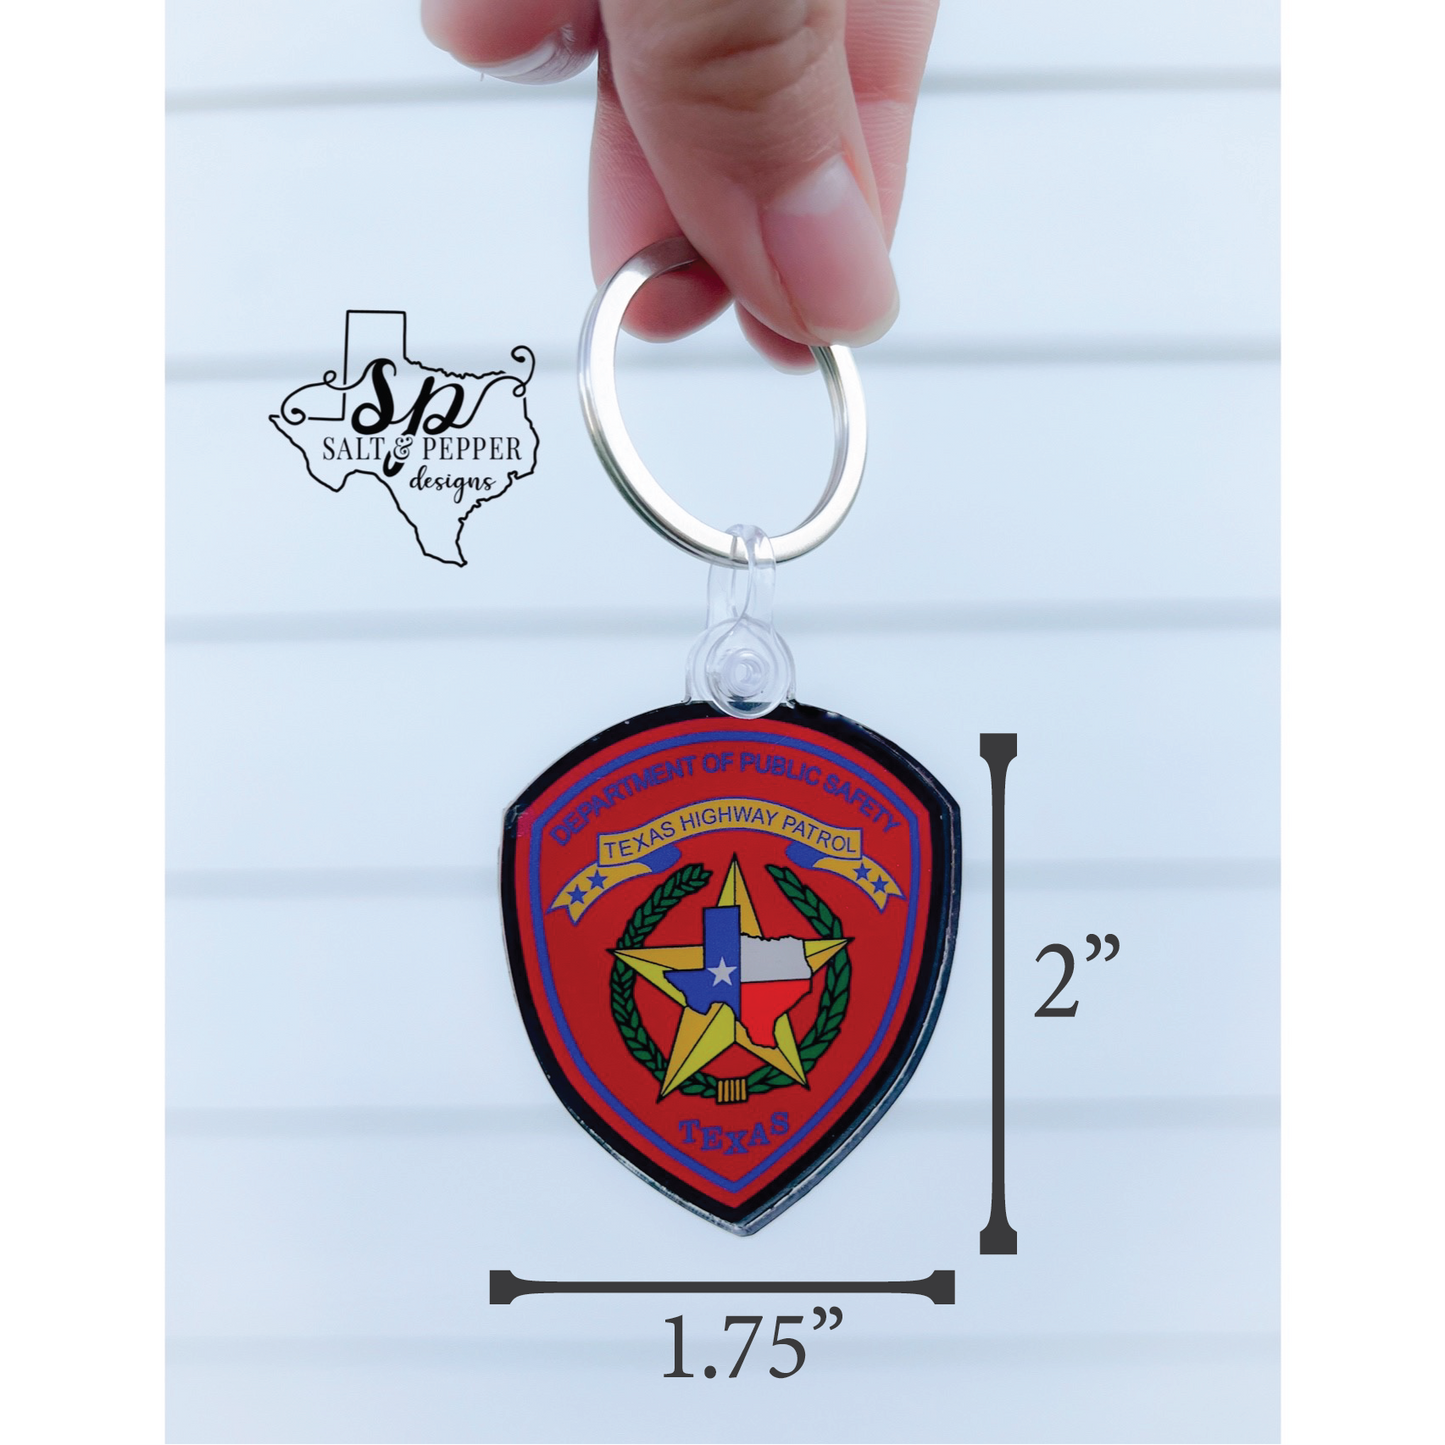 Texas Highway Patrol Patch Keychain - Acrylic